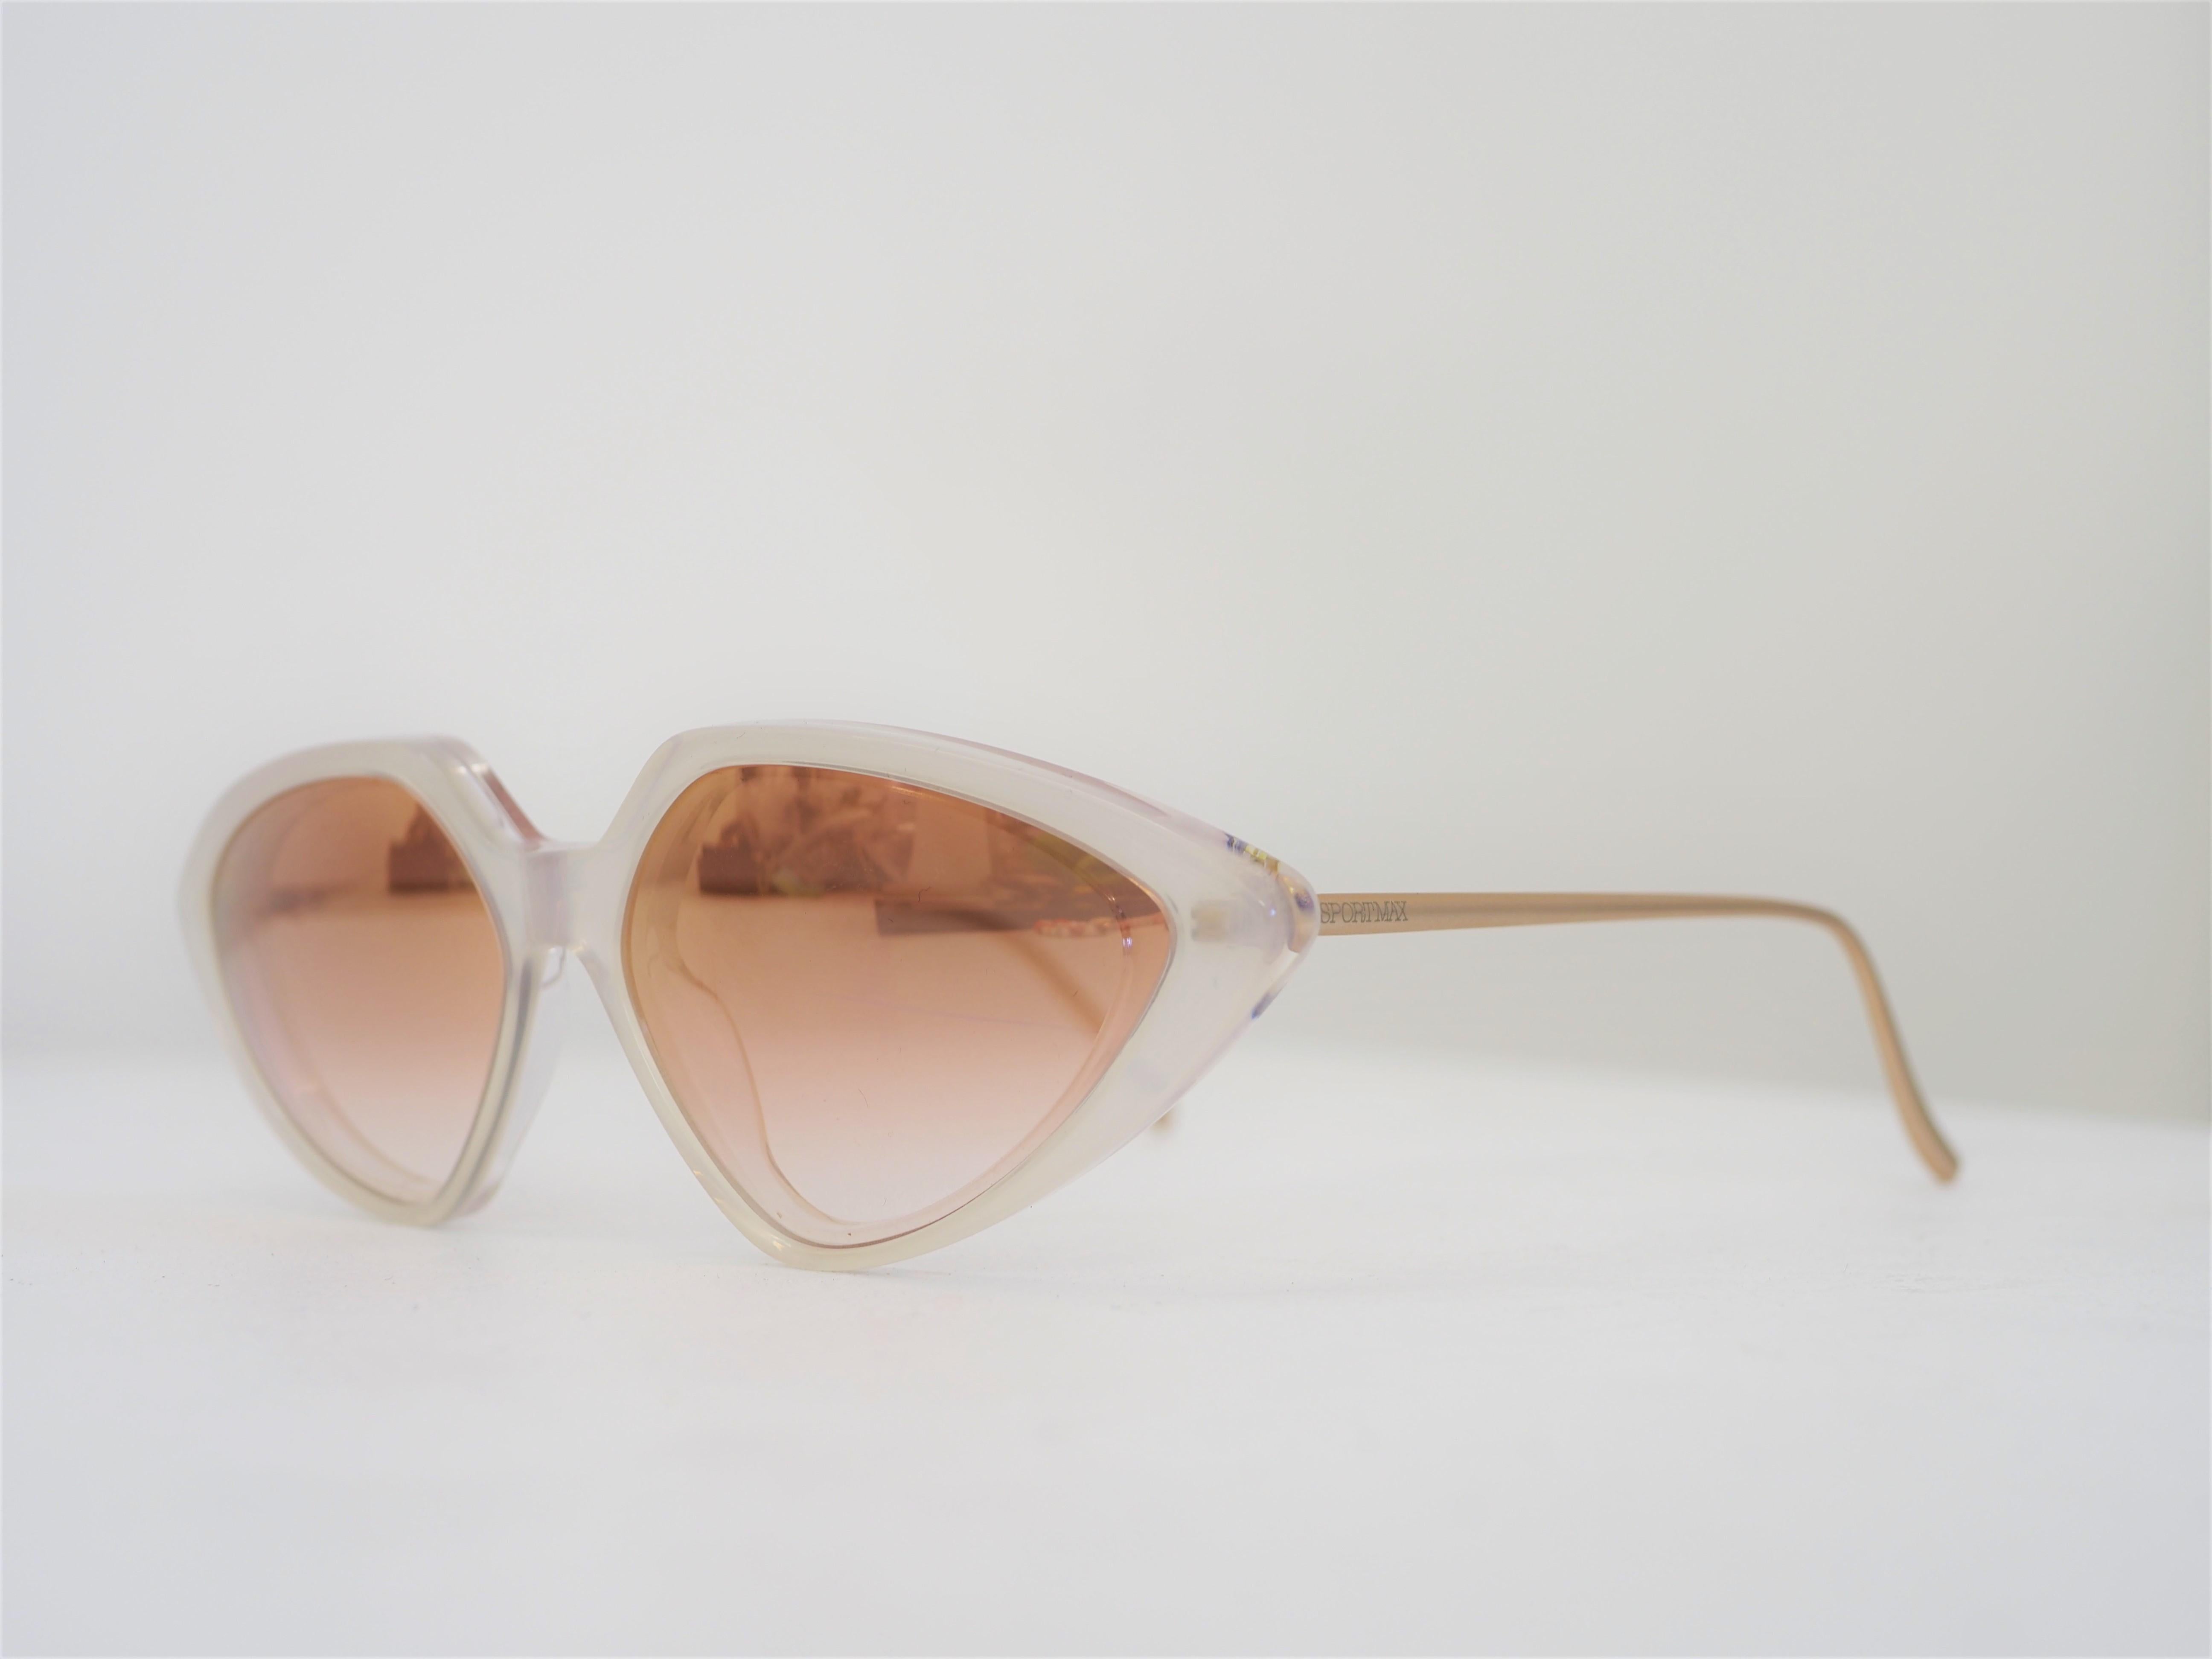 Sportmax pink sunglasses In Excellent Condition For Sale In Capri, IT